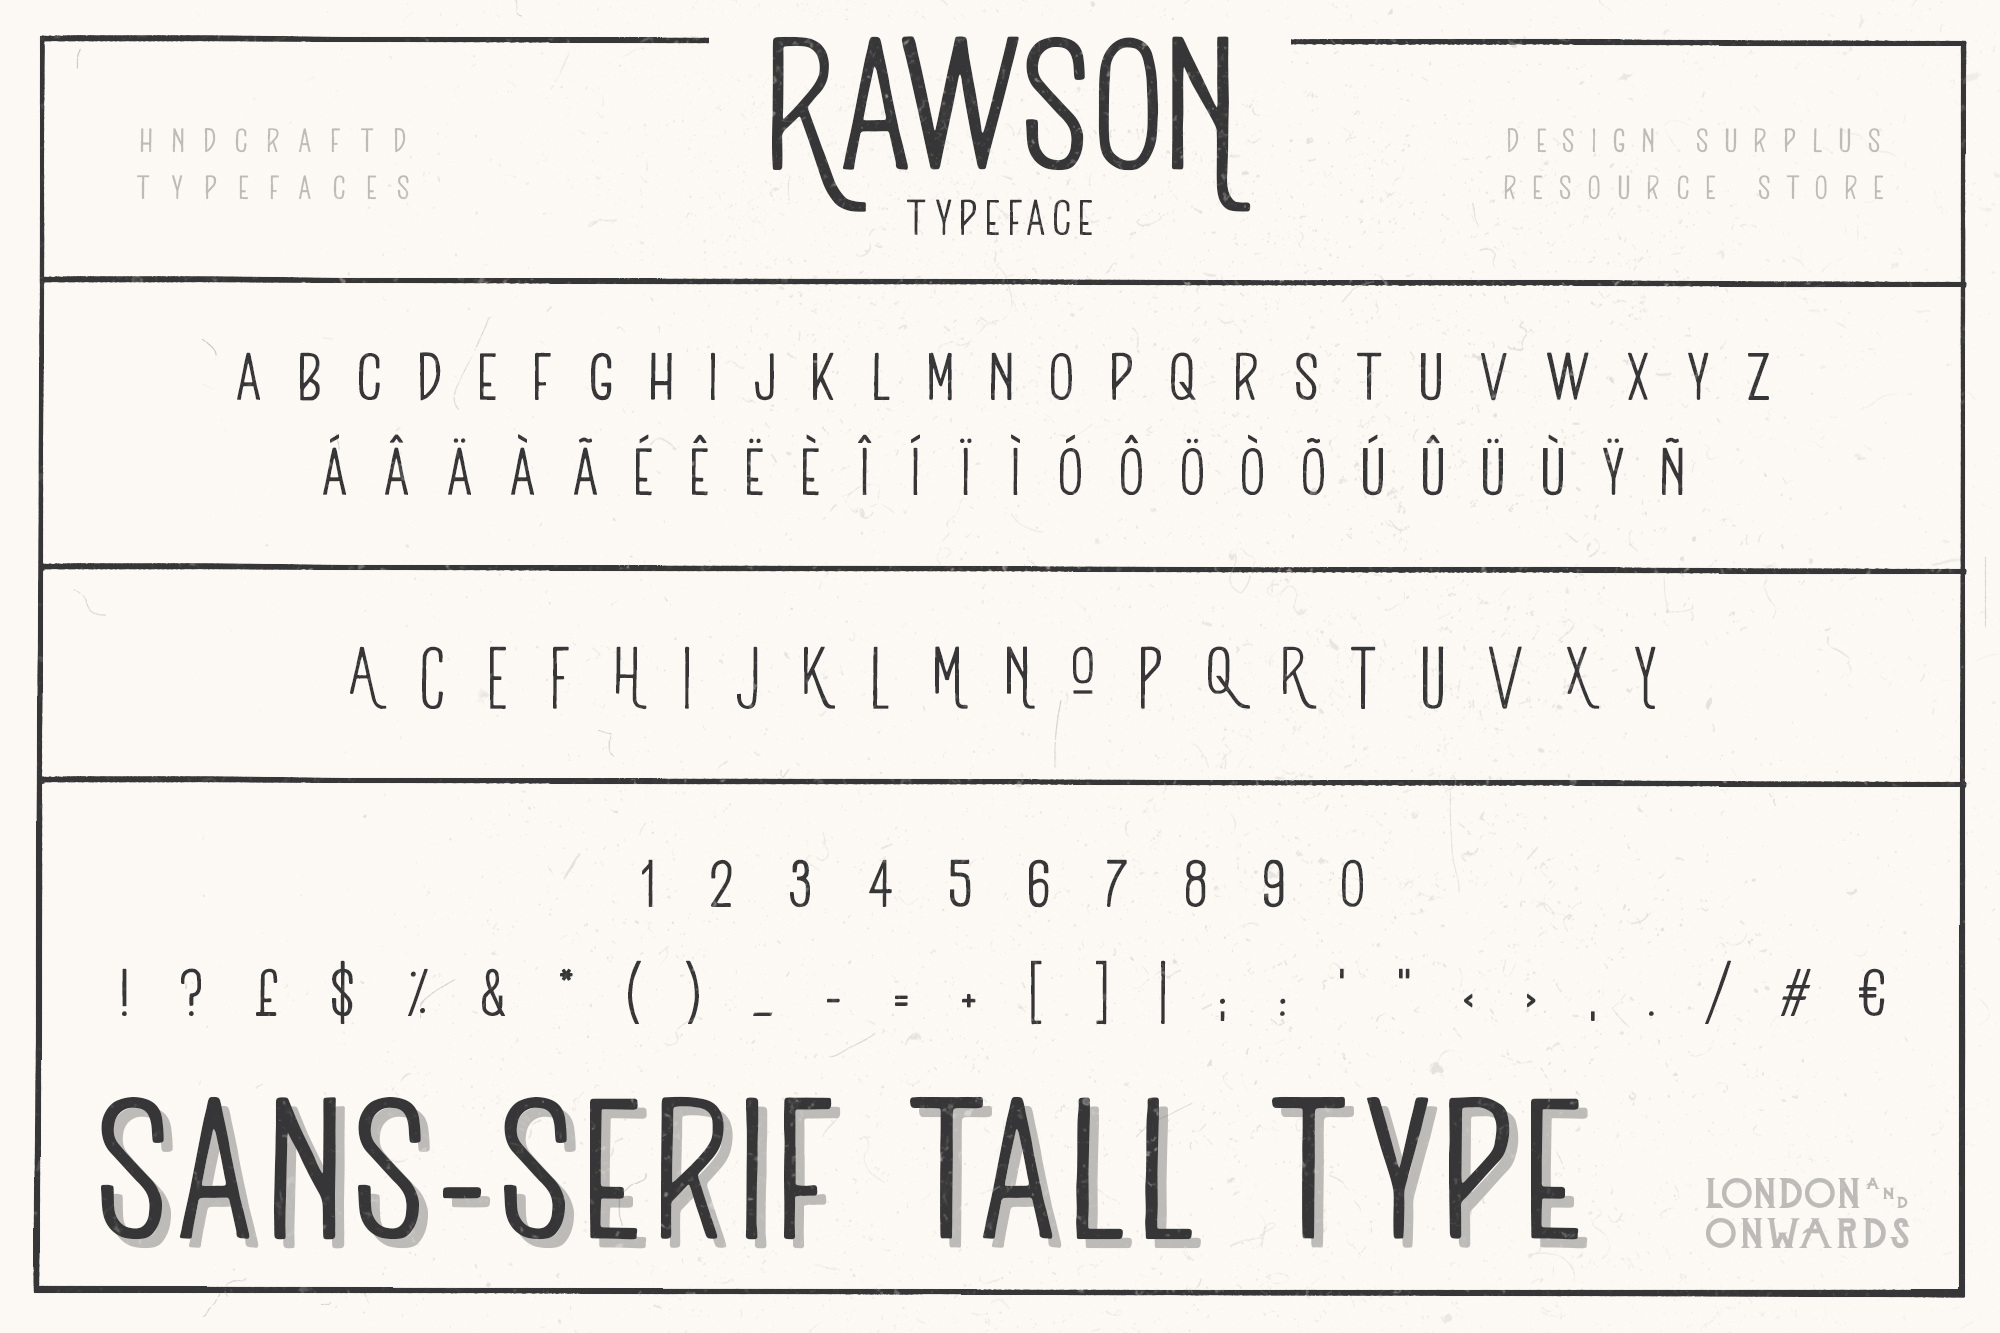 Rawson & Stove Typefaces